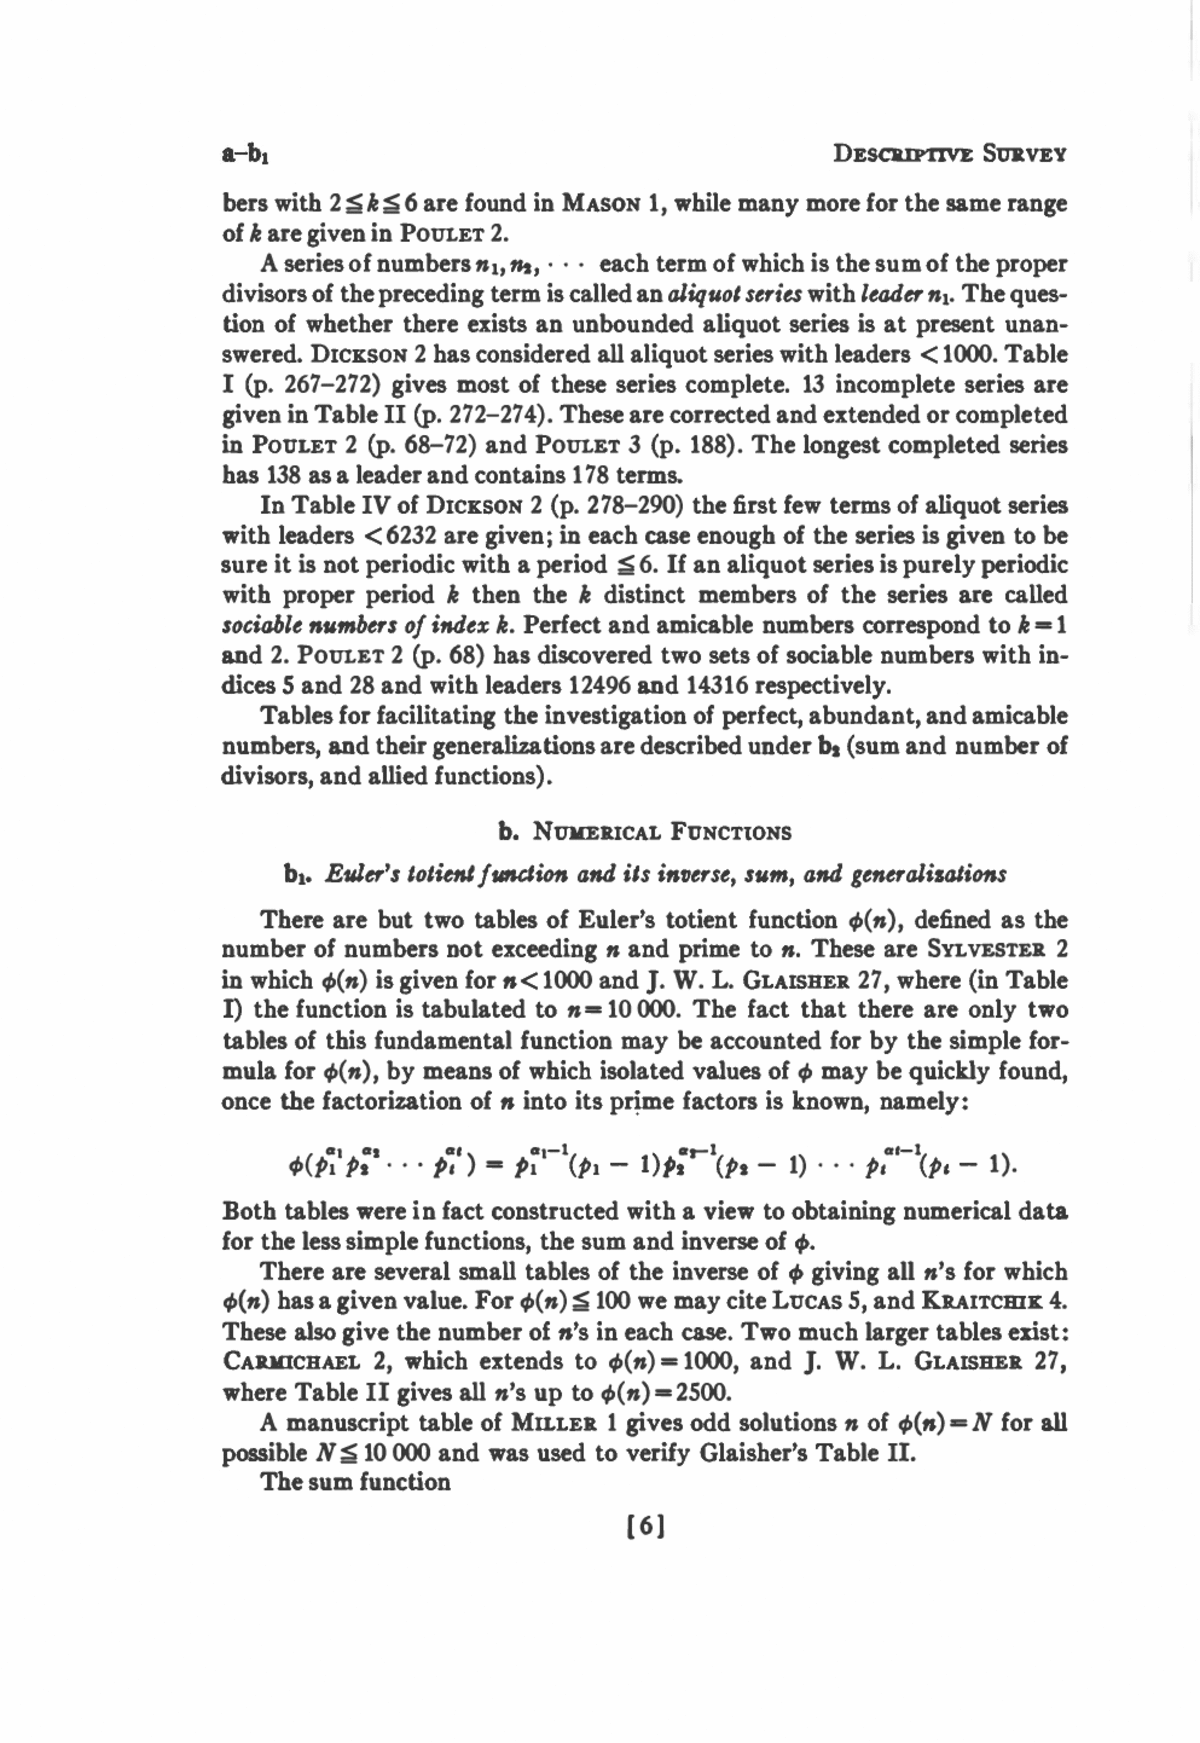 Waring's Problem & Lagrange's Four-Square Theorem